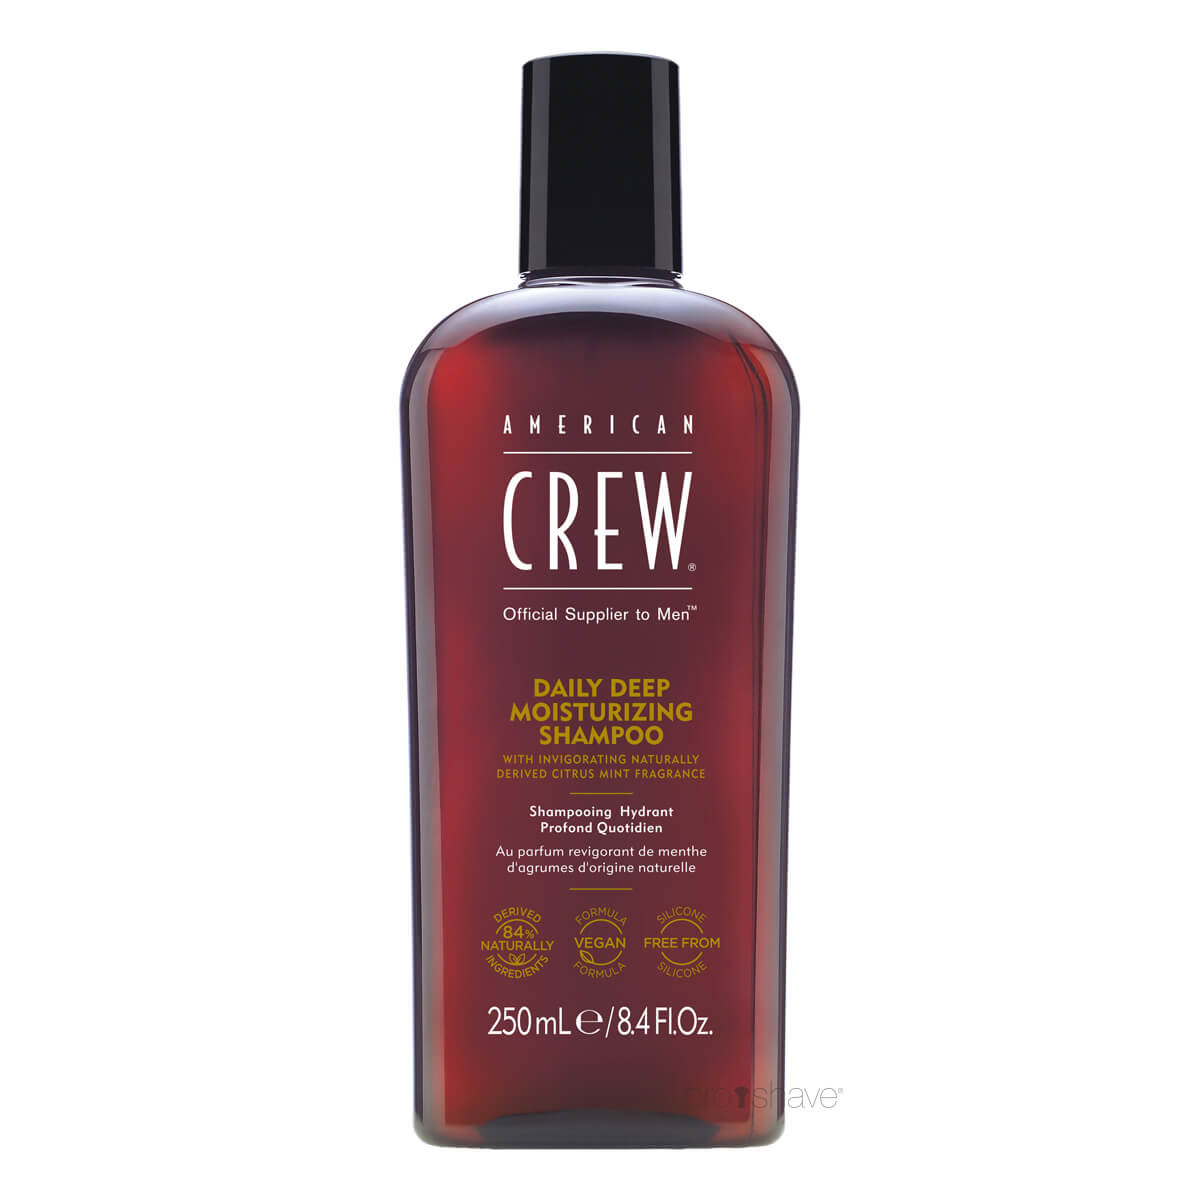 Billede af American Crew Daily Deep Moisturizing Shampoo, 250 ml. hos Proshave